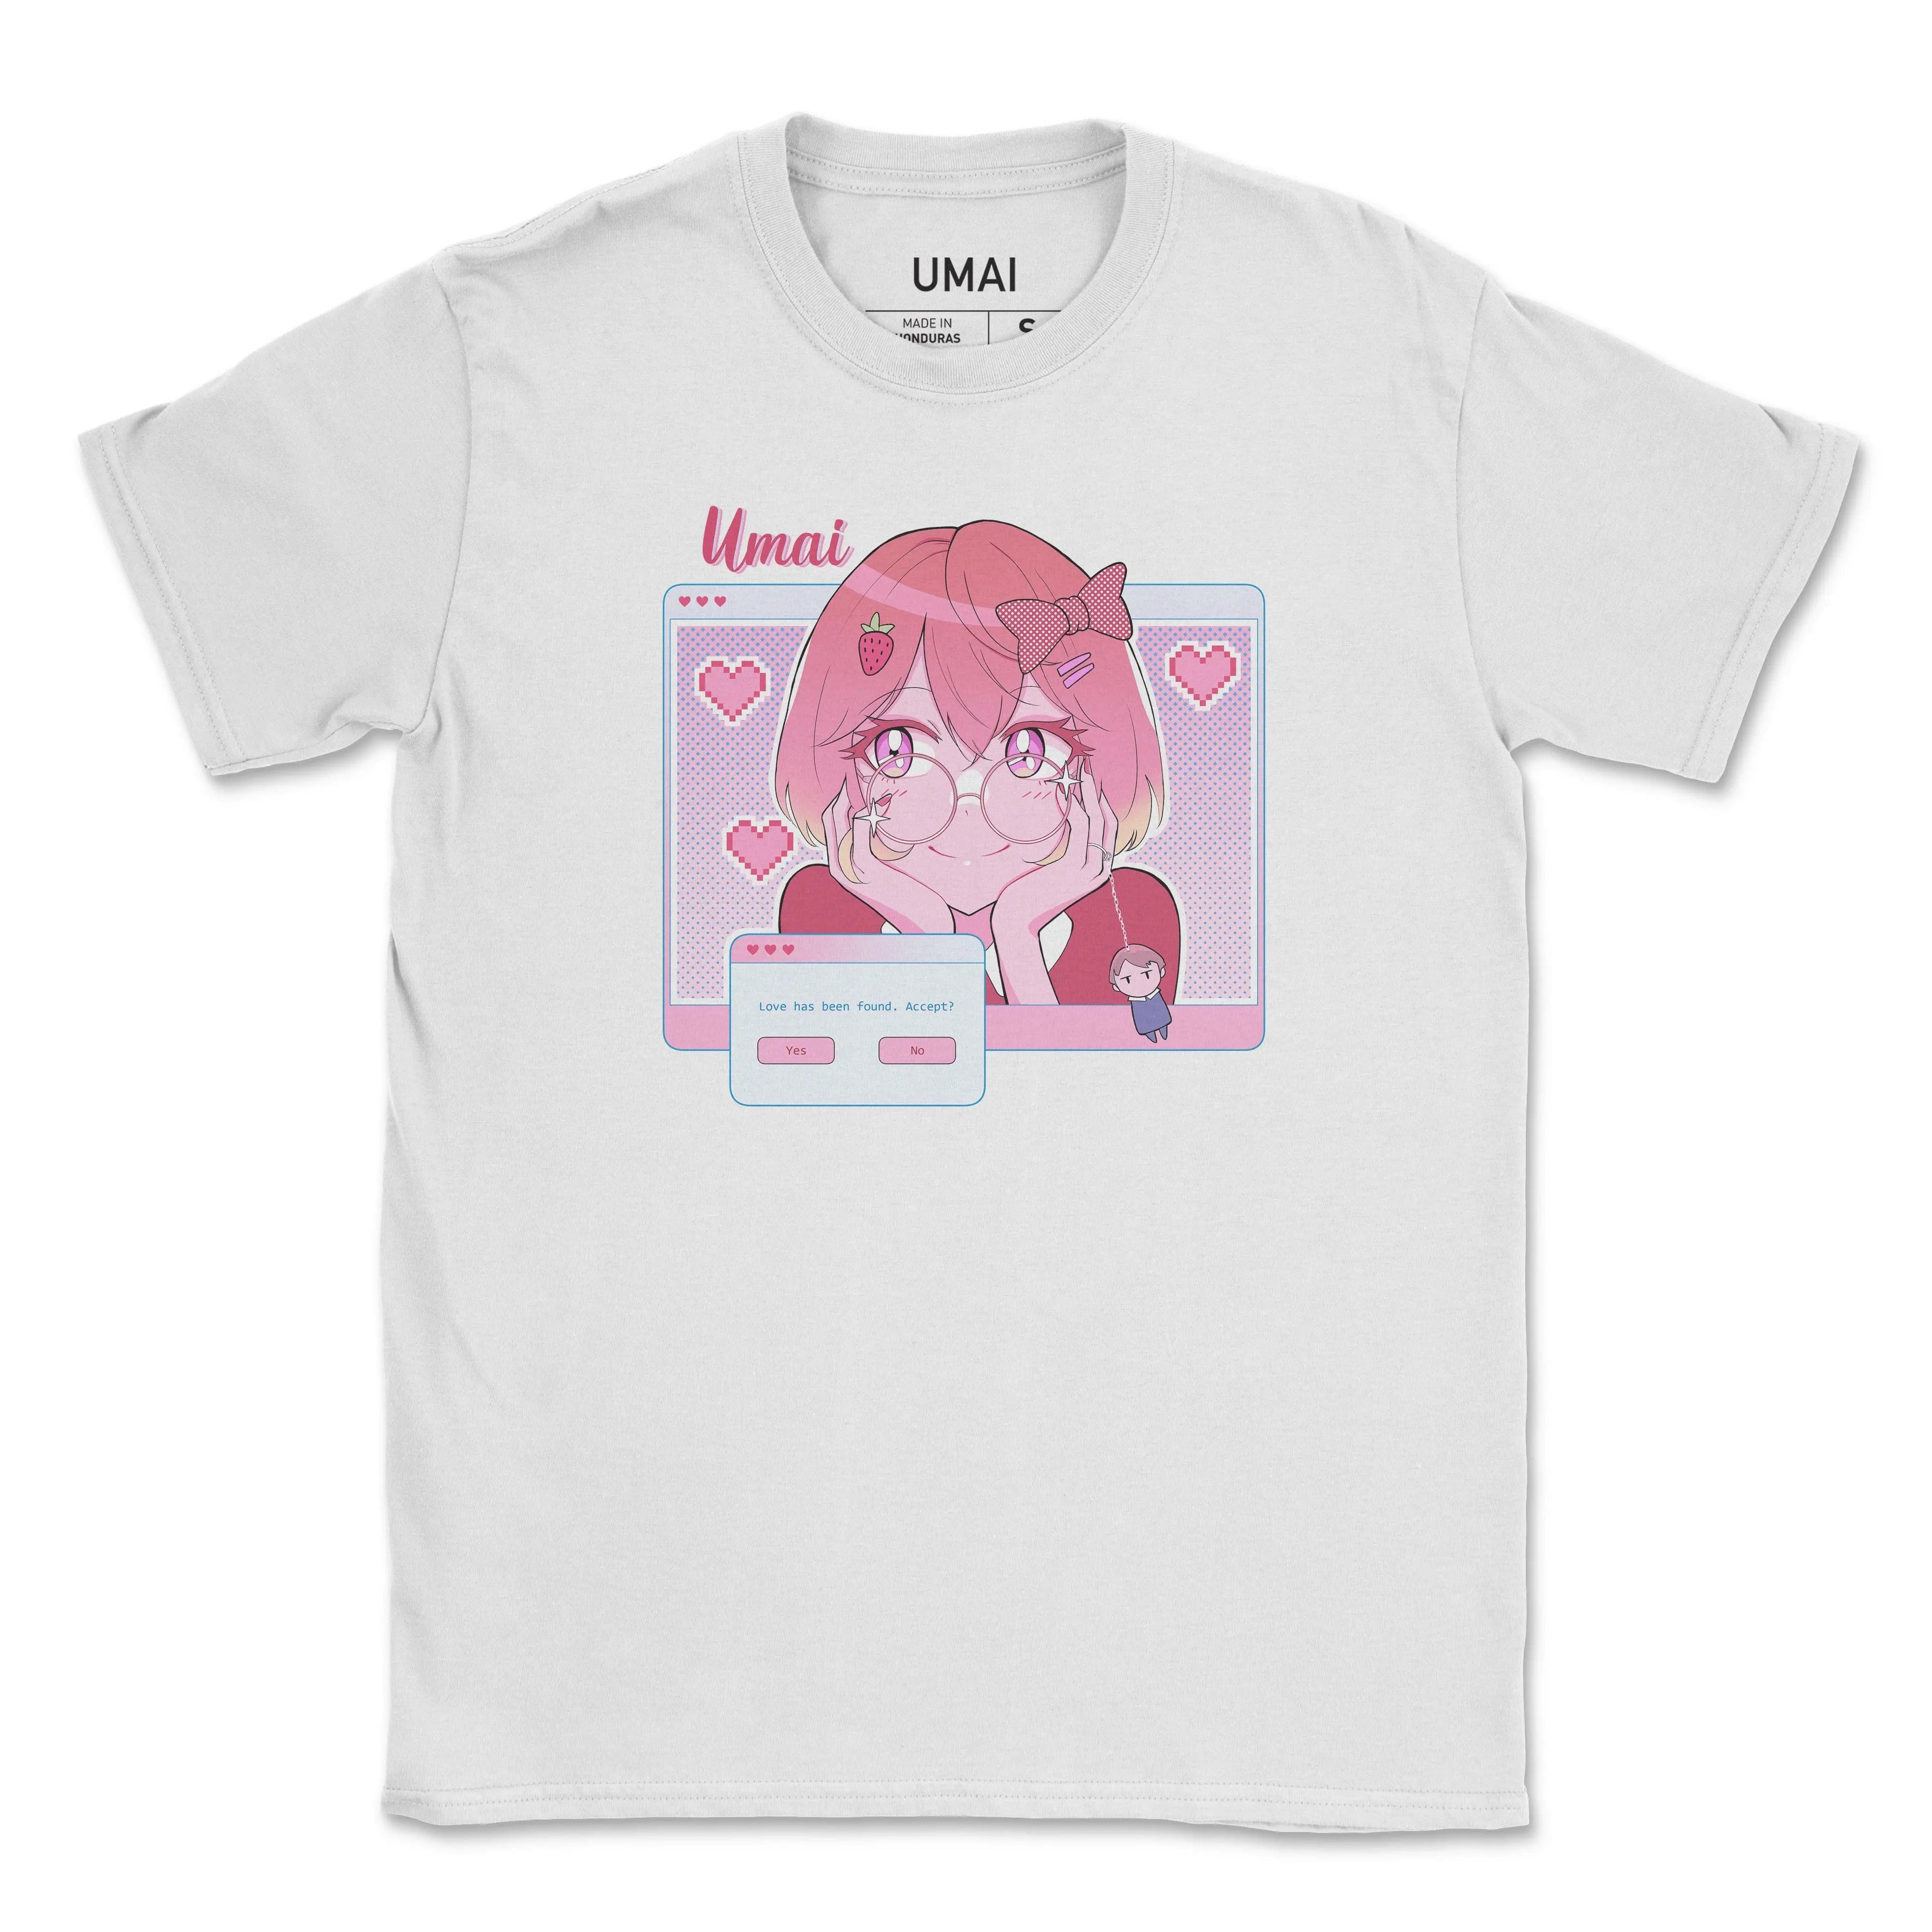 Februar 2021 Exklusiv (Mädchen) • T-Shirt